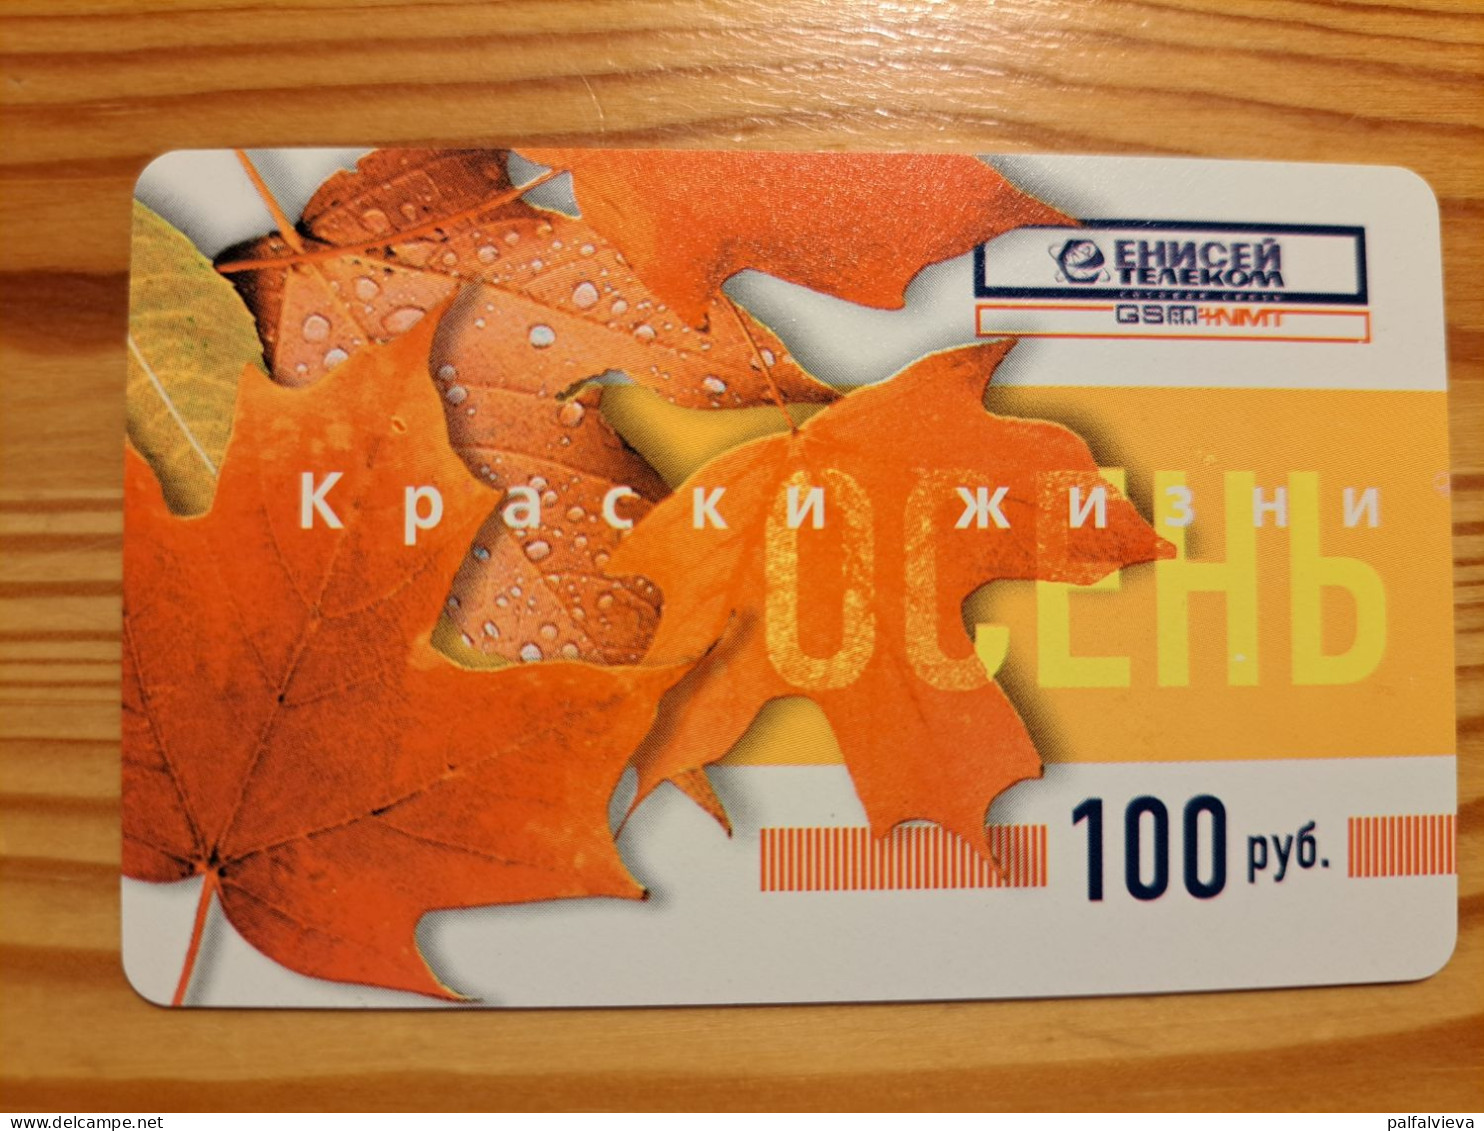 Prepaid Phonecard Russia, Enisey Telecom, Krasnoyarsk - Leaves - Russia